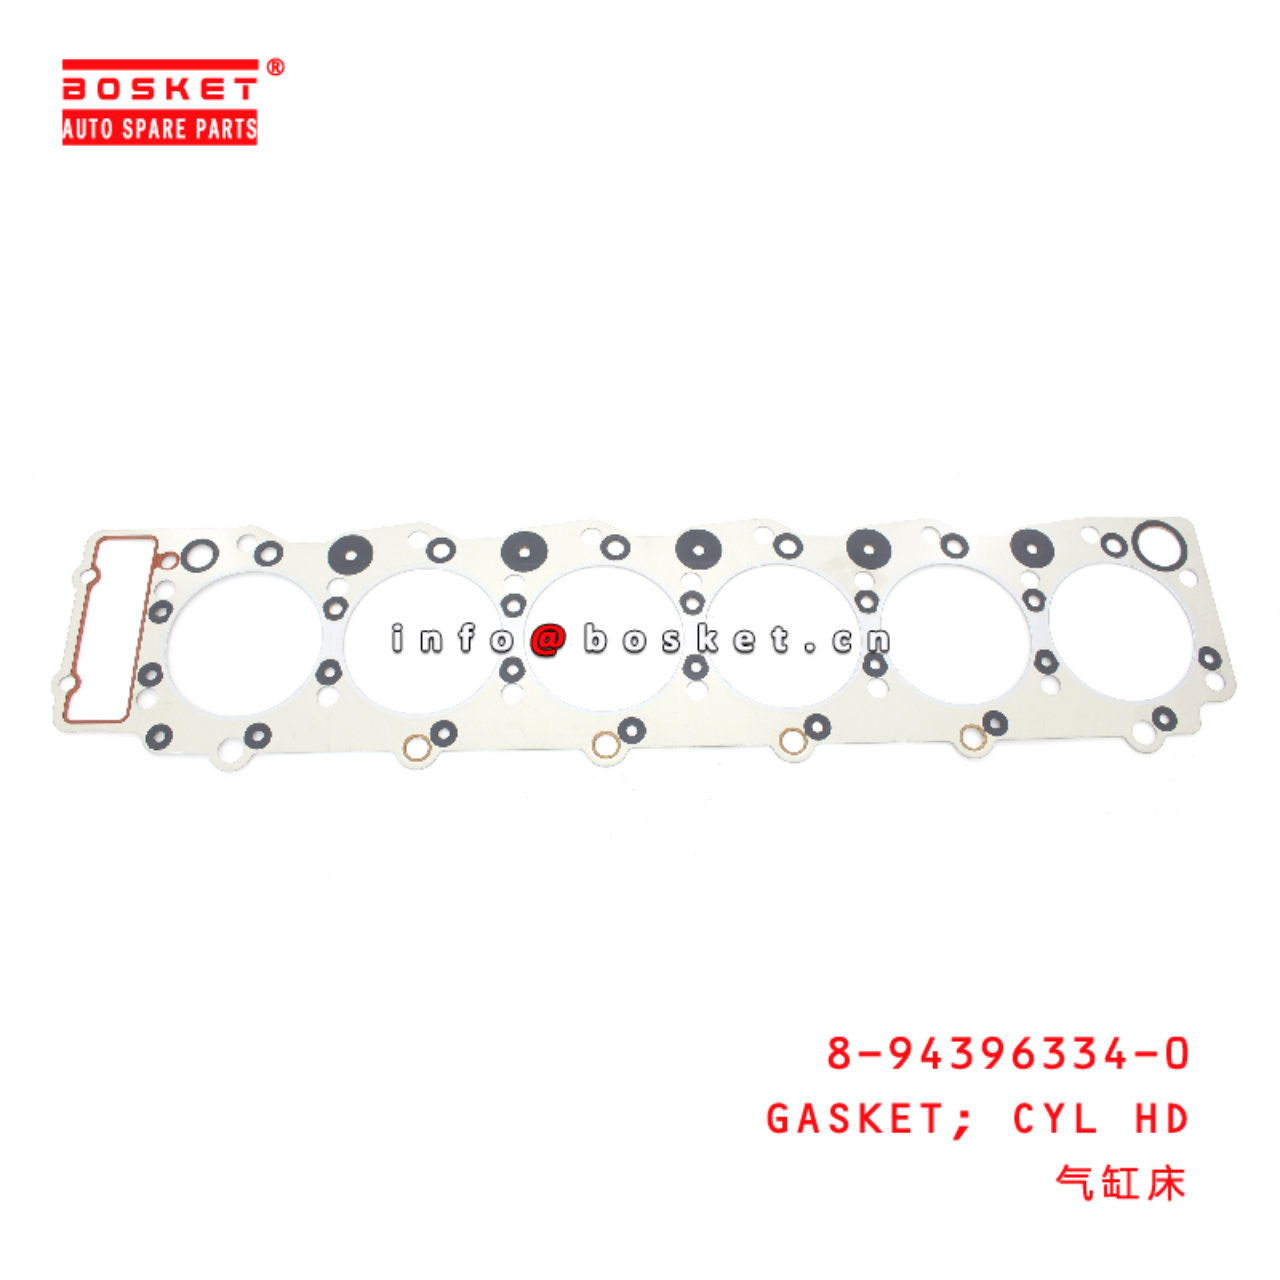 8-94396334-0 Cylinder Head Gasket suitable for ISUZU FVR32 6HE1 8943963340